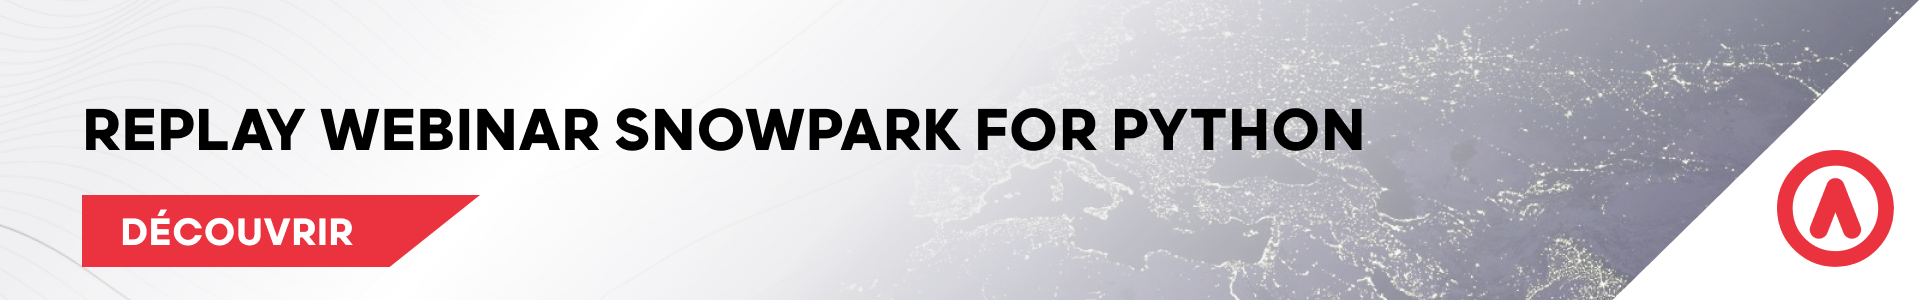 Replay Snowpark for Python banner